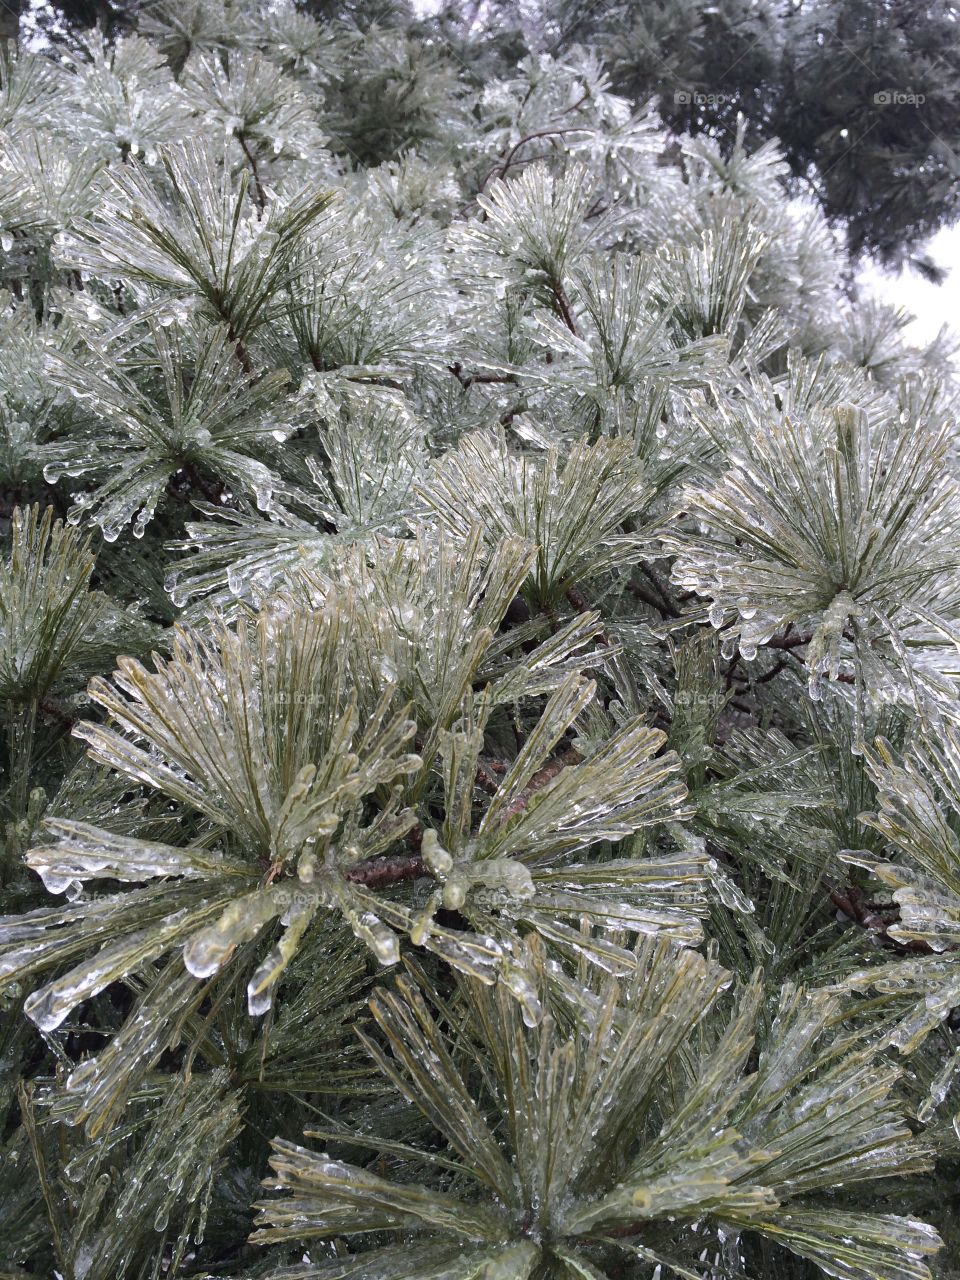 frozen pine tree